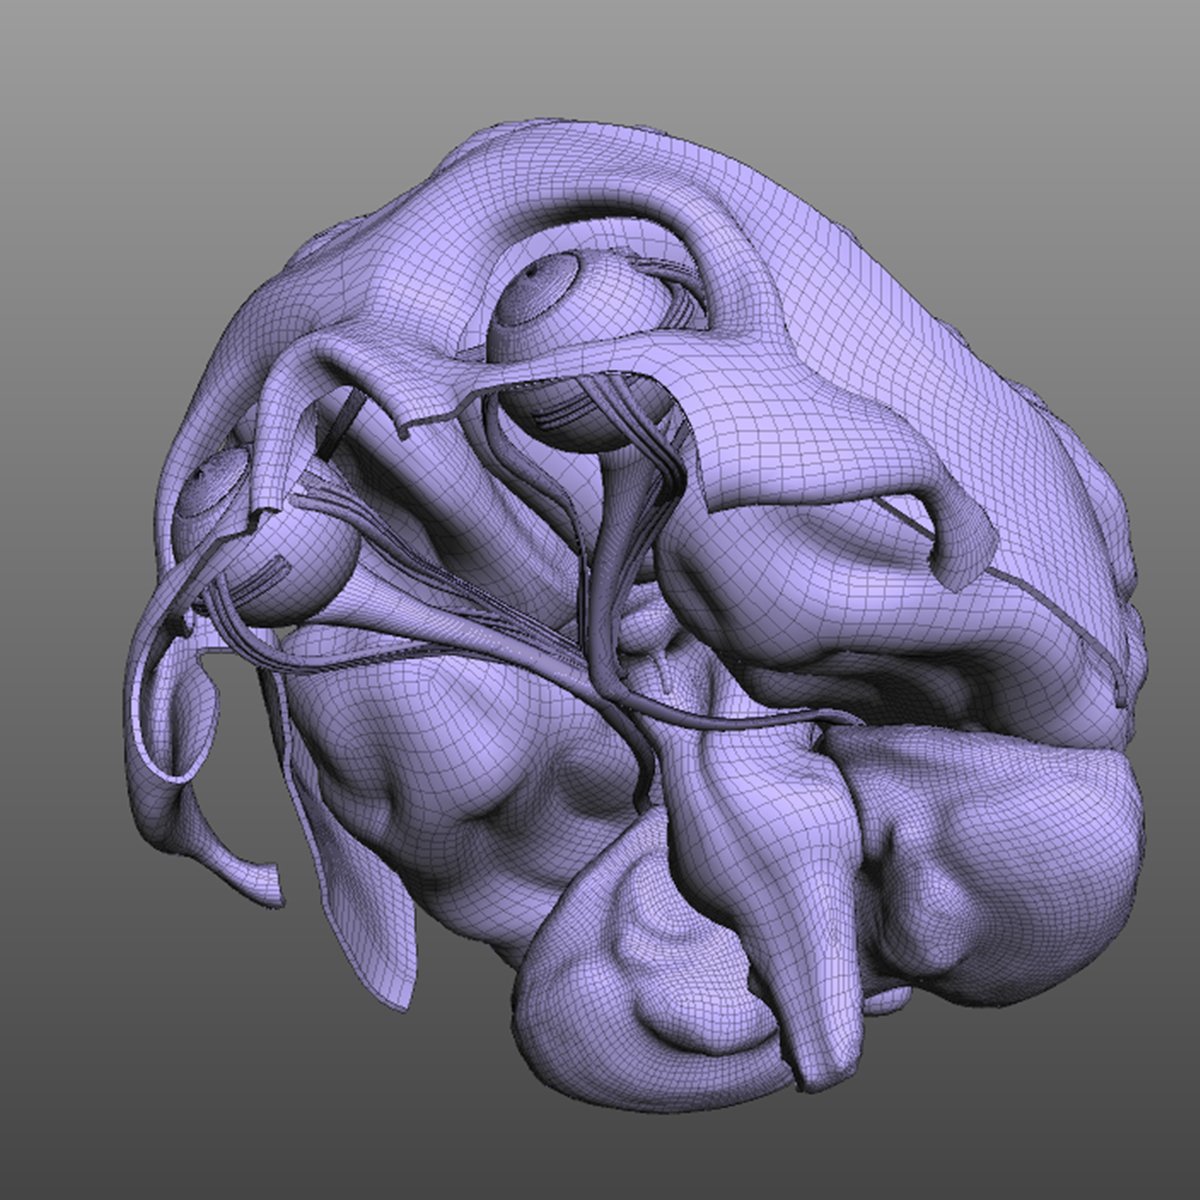 7 3 brain. Мозг 3д модель отделы. Мозг схема 3д.